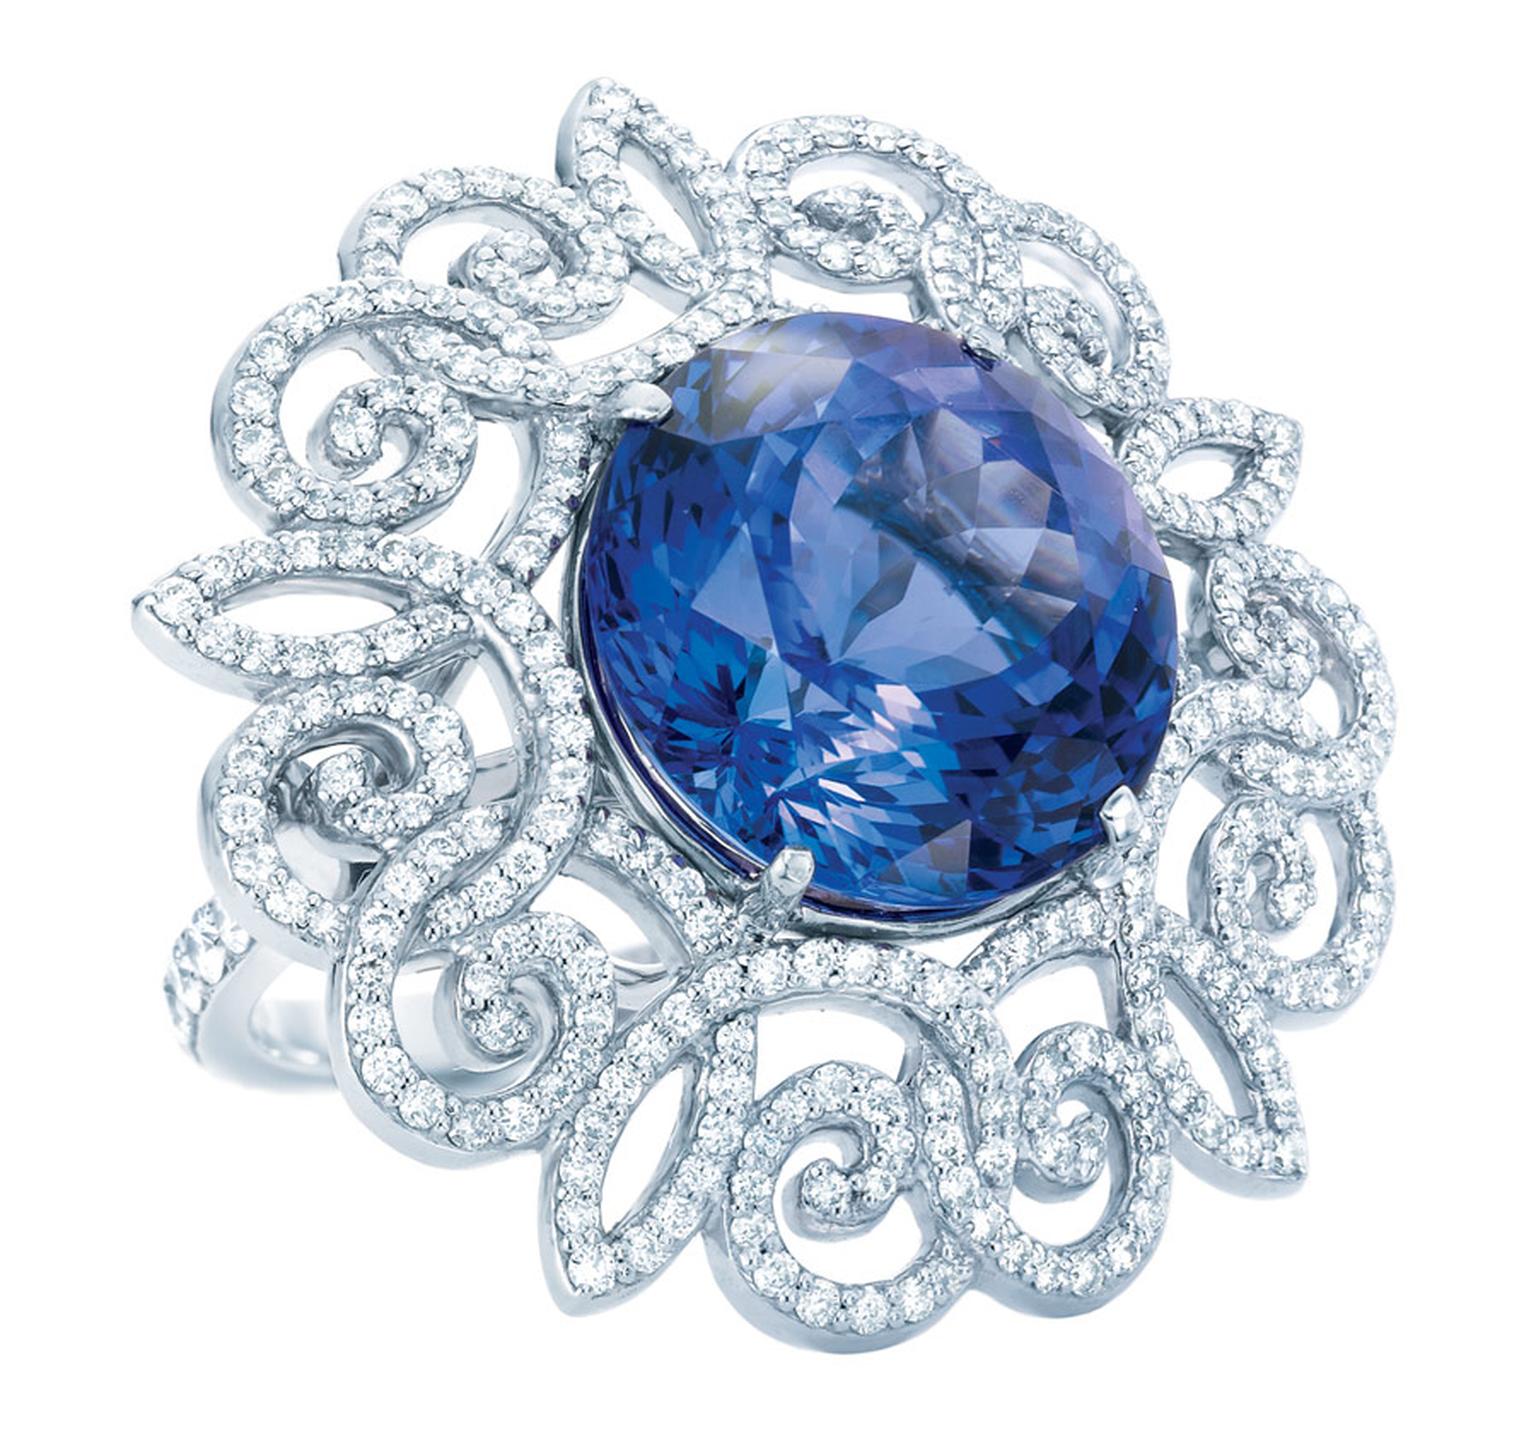 Tiffany Anniversary platinum ring with a 9.99ct tanzanite and diamonds.